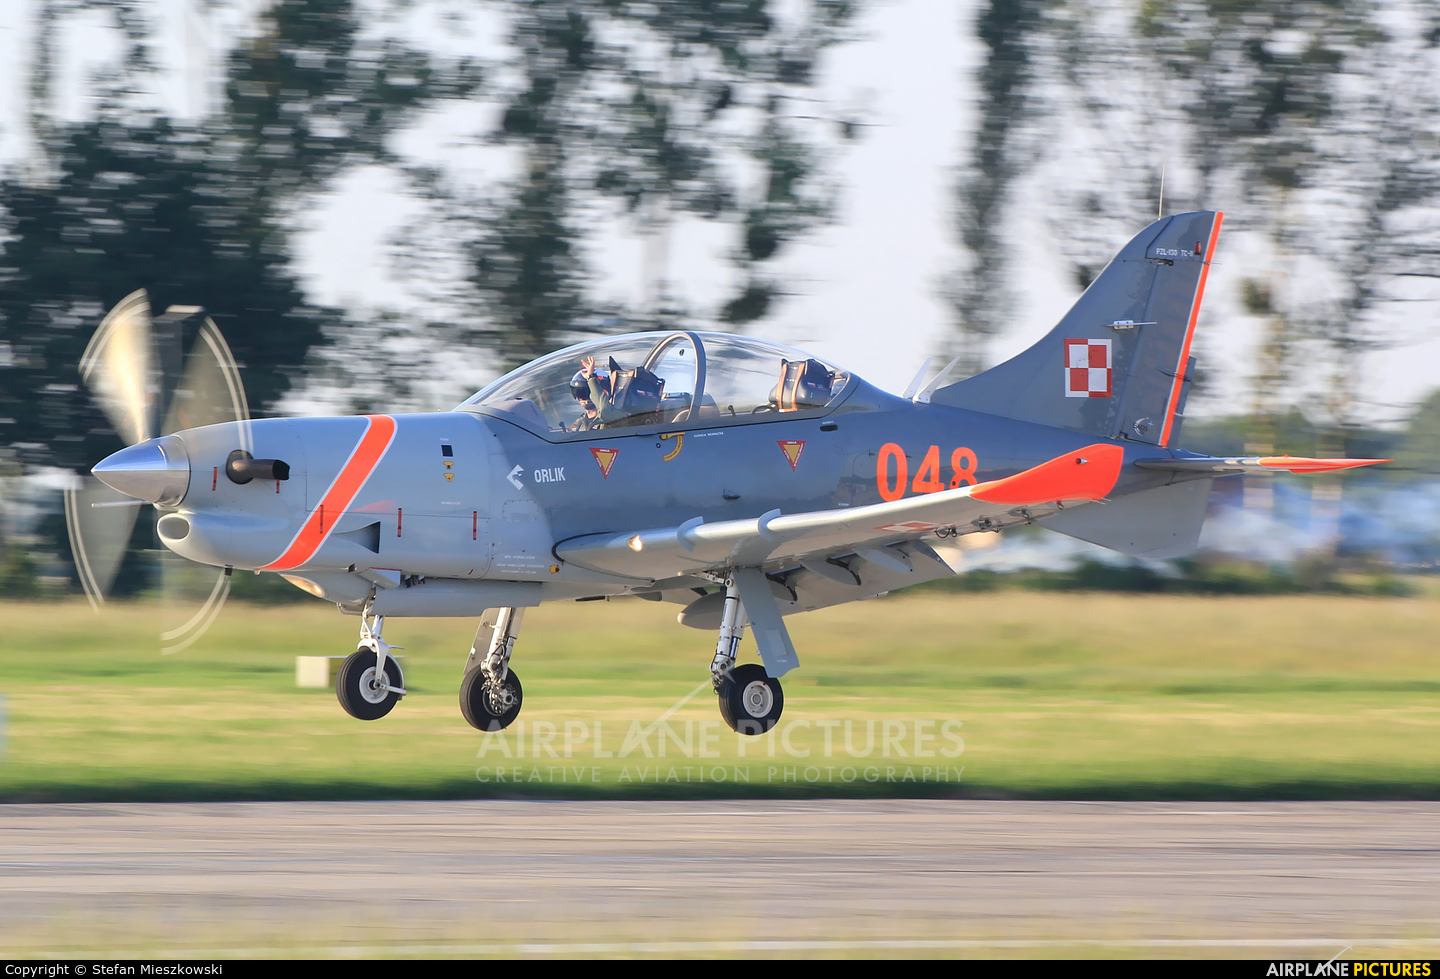 Poland - Air Force "Orlik Acrobatic Group" 048 aircraft at Radom - Sadków